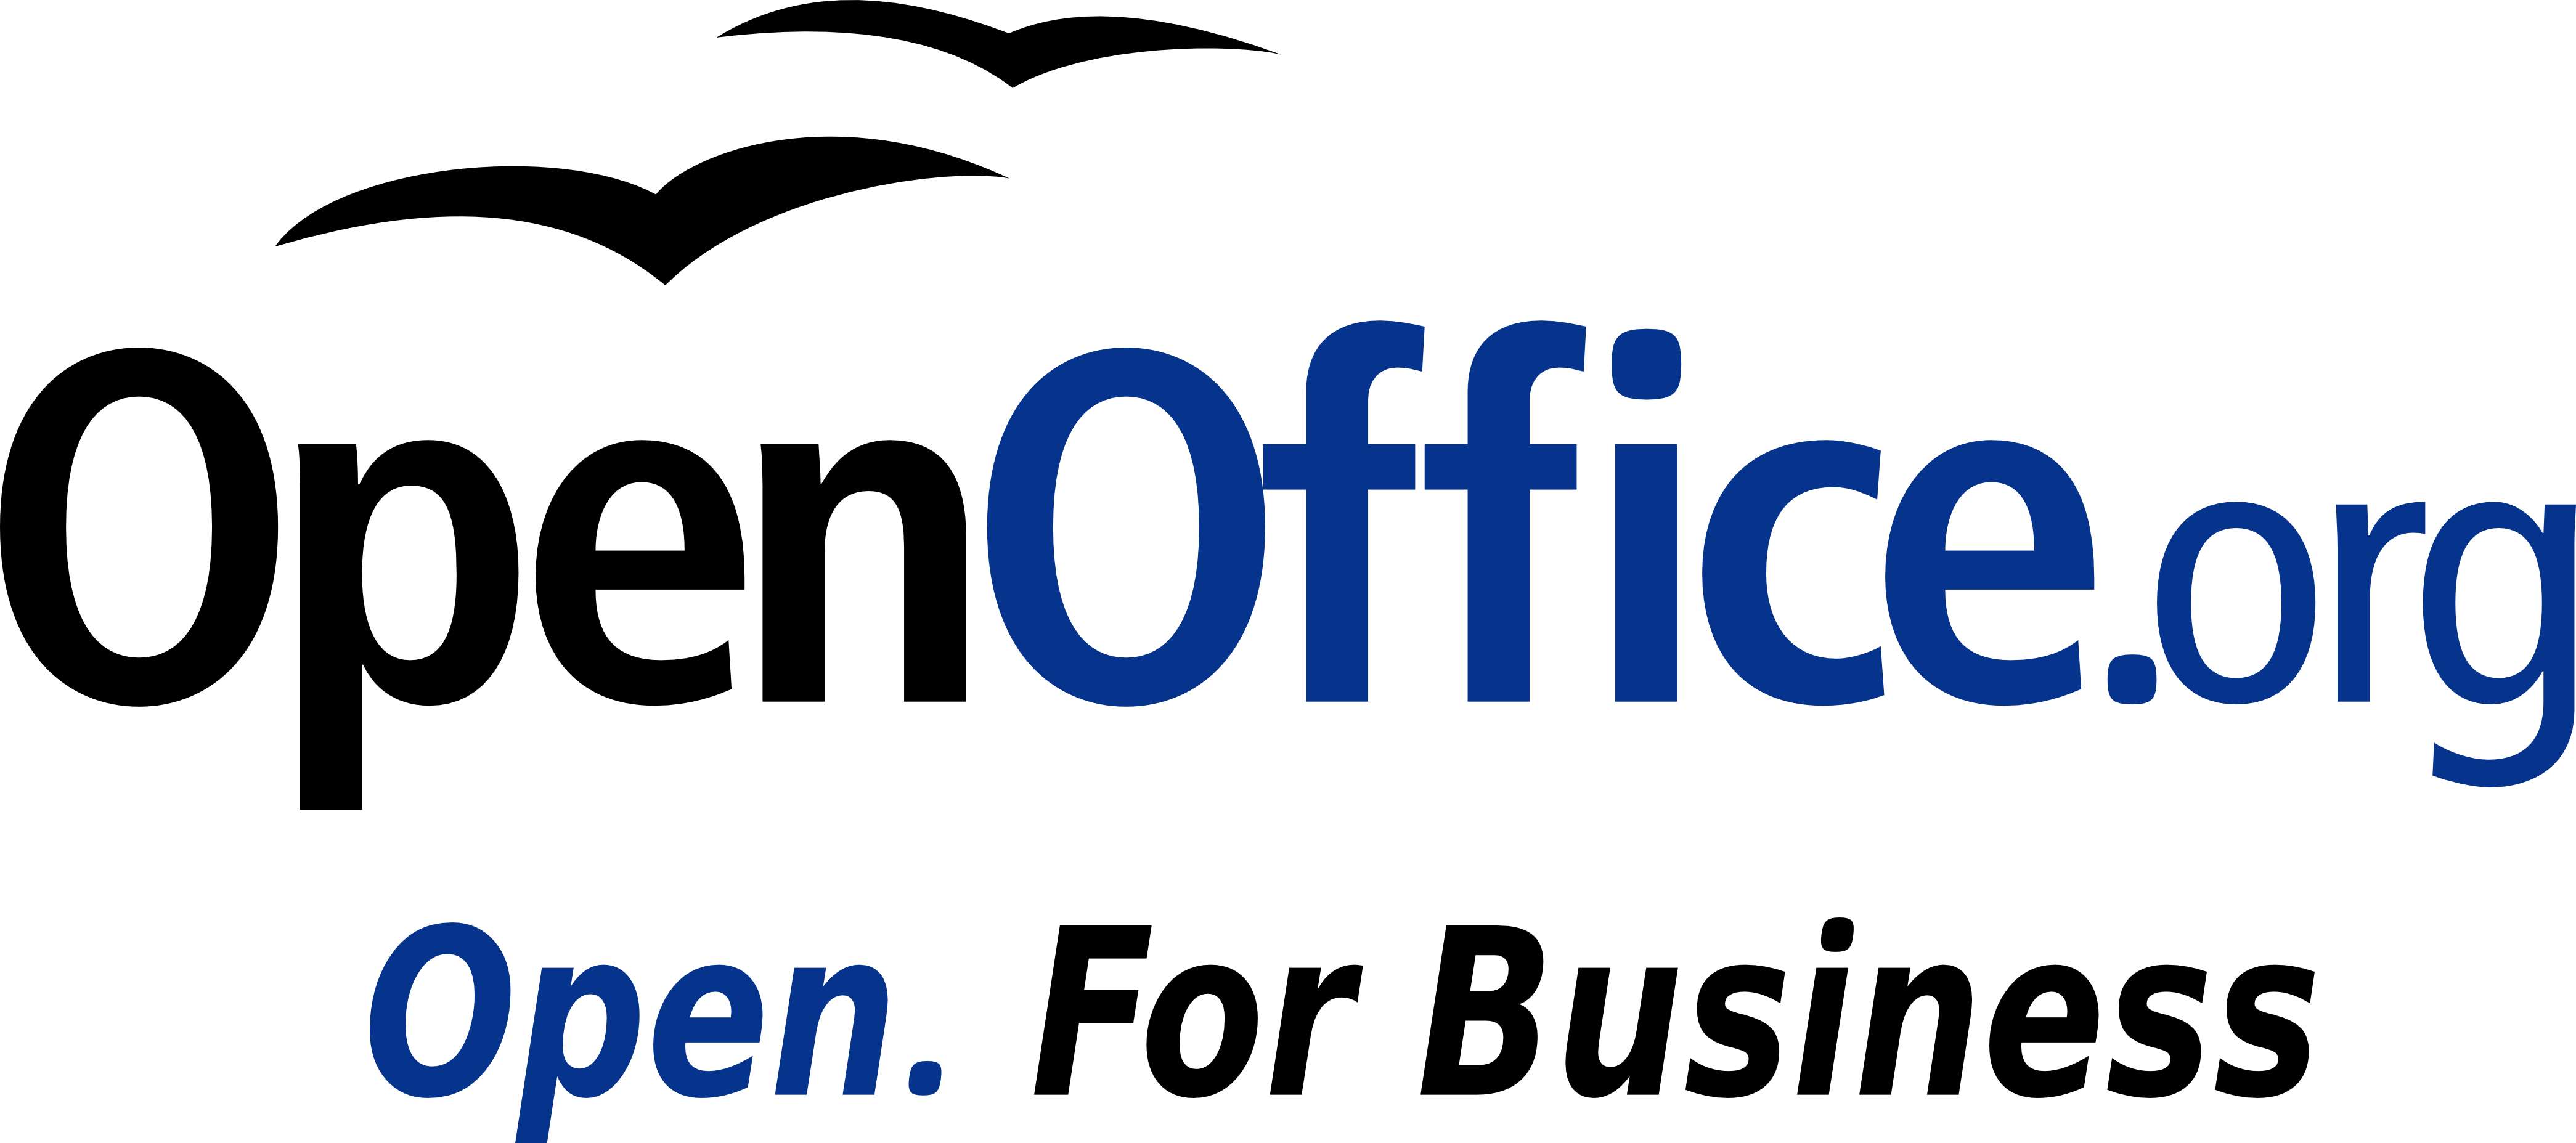 OpenOffice Logo - OpenOffice.org Art - Official Logos Gallery